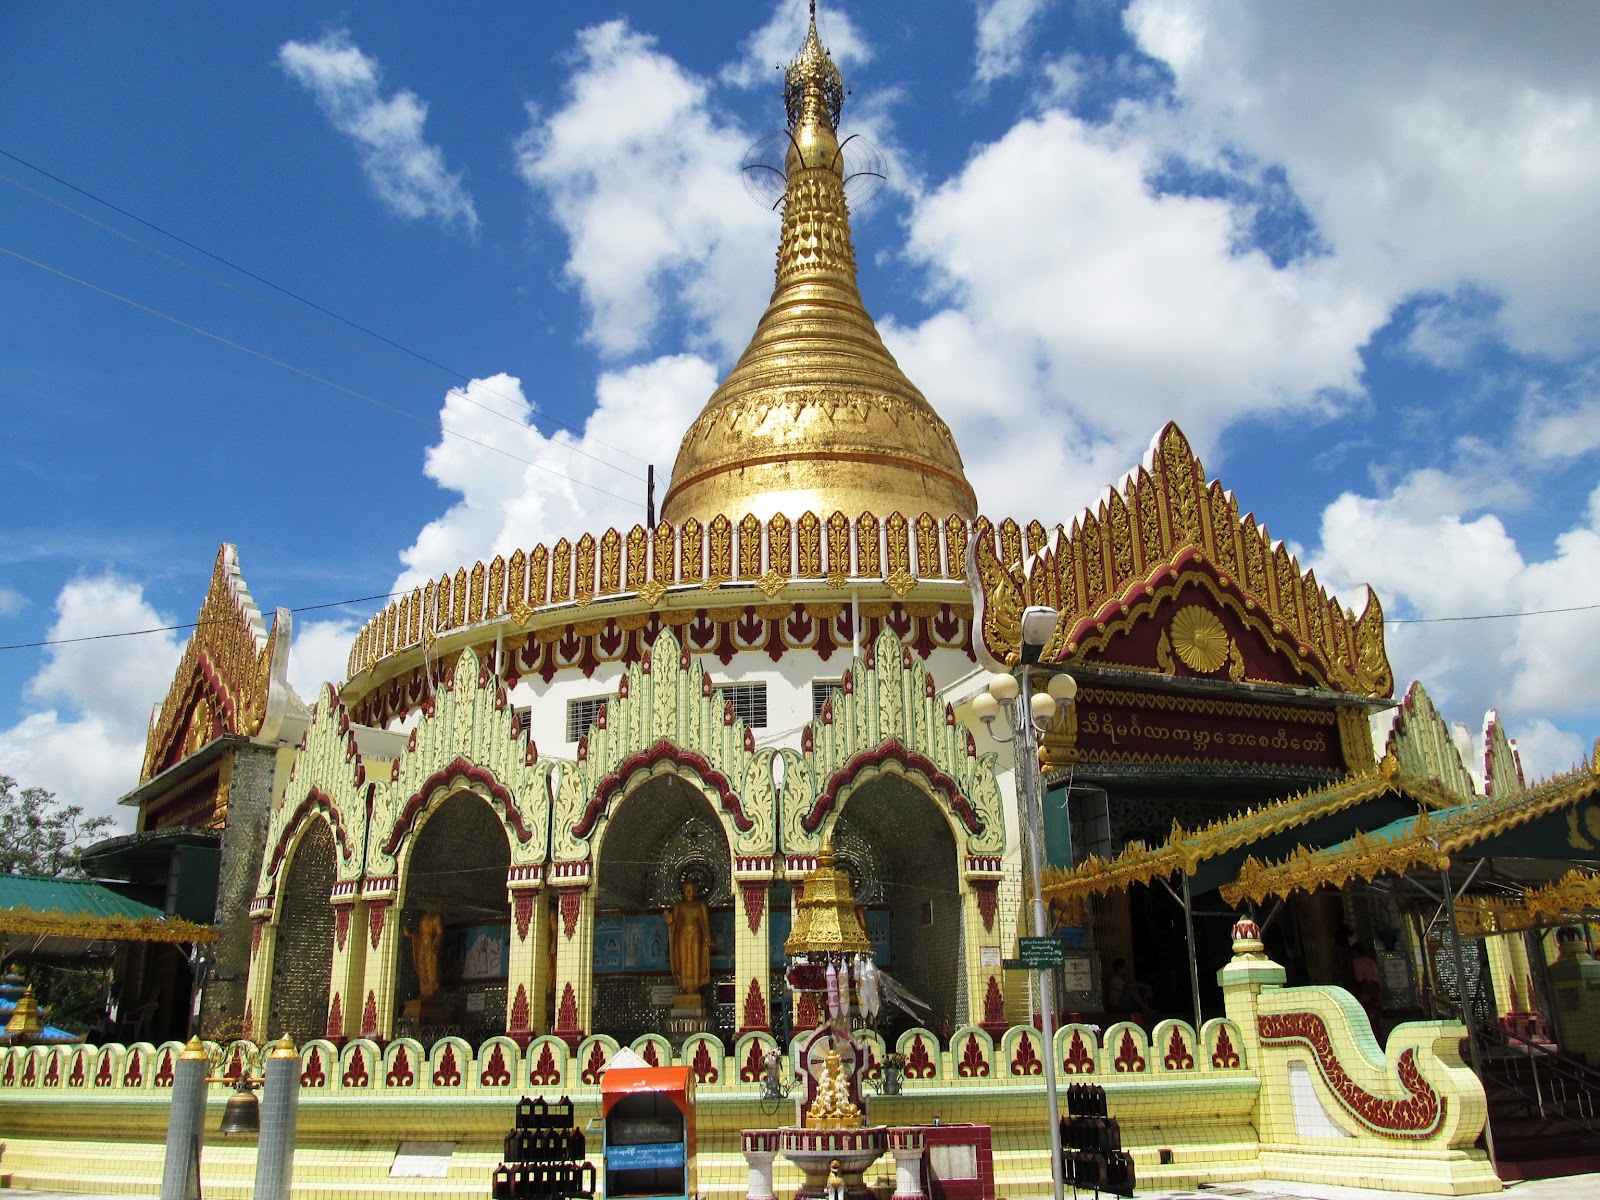 Описание: C:\Users\Inna\Desktop\Фото Мьянма\Kaba Aye Pagoda\IMG_3359 Kaba Aye (World Peace) Pagoda.JPG